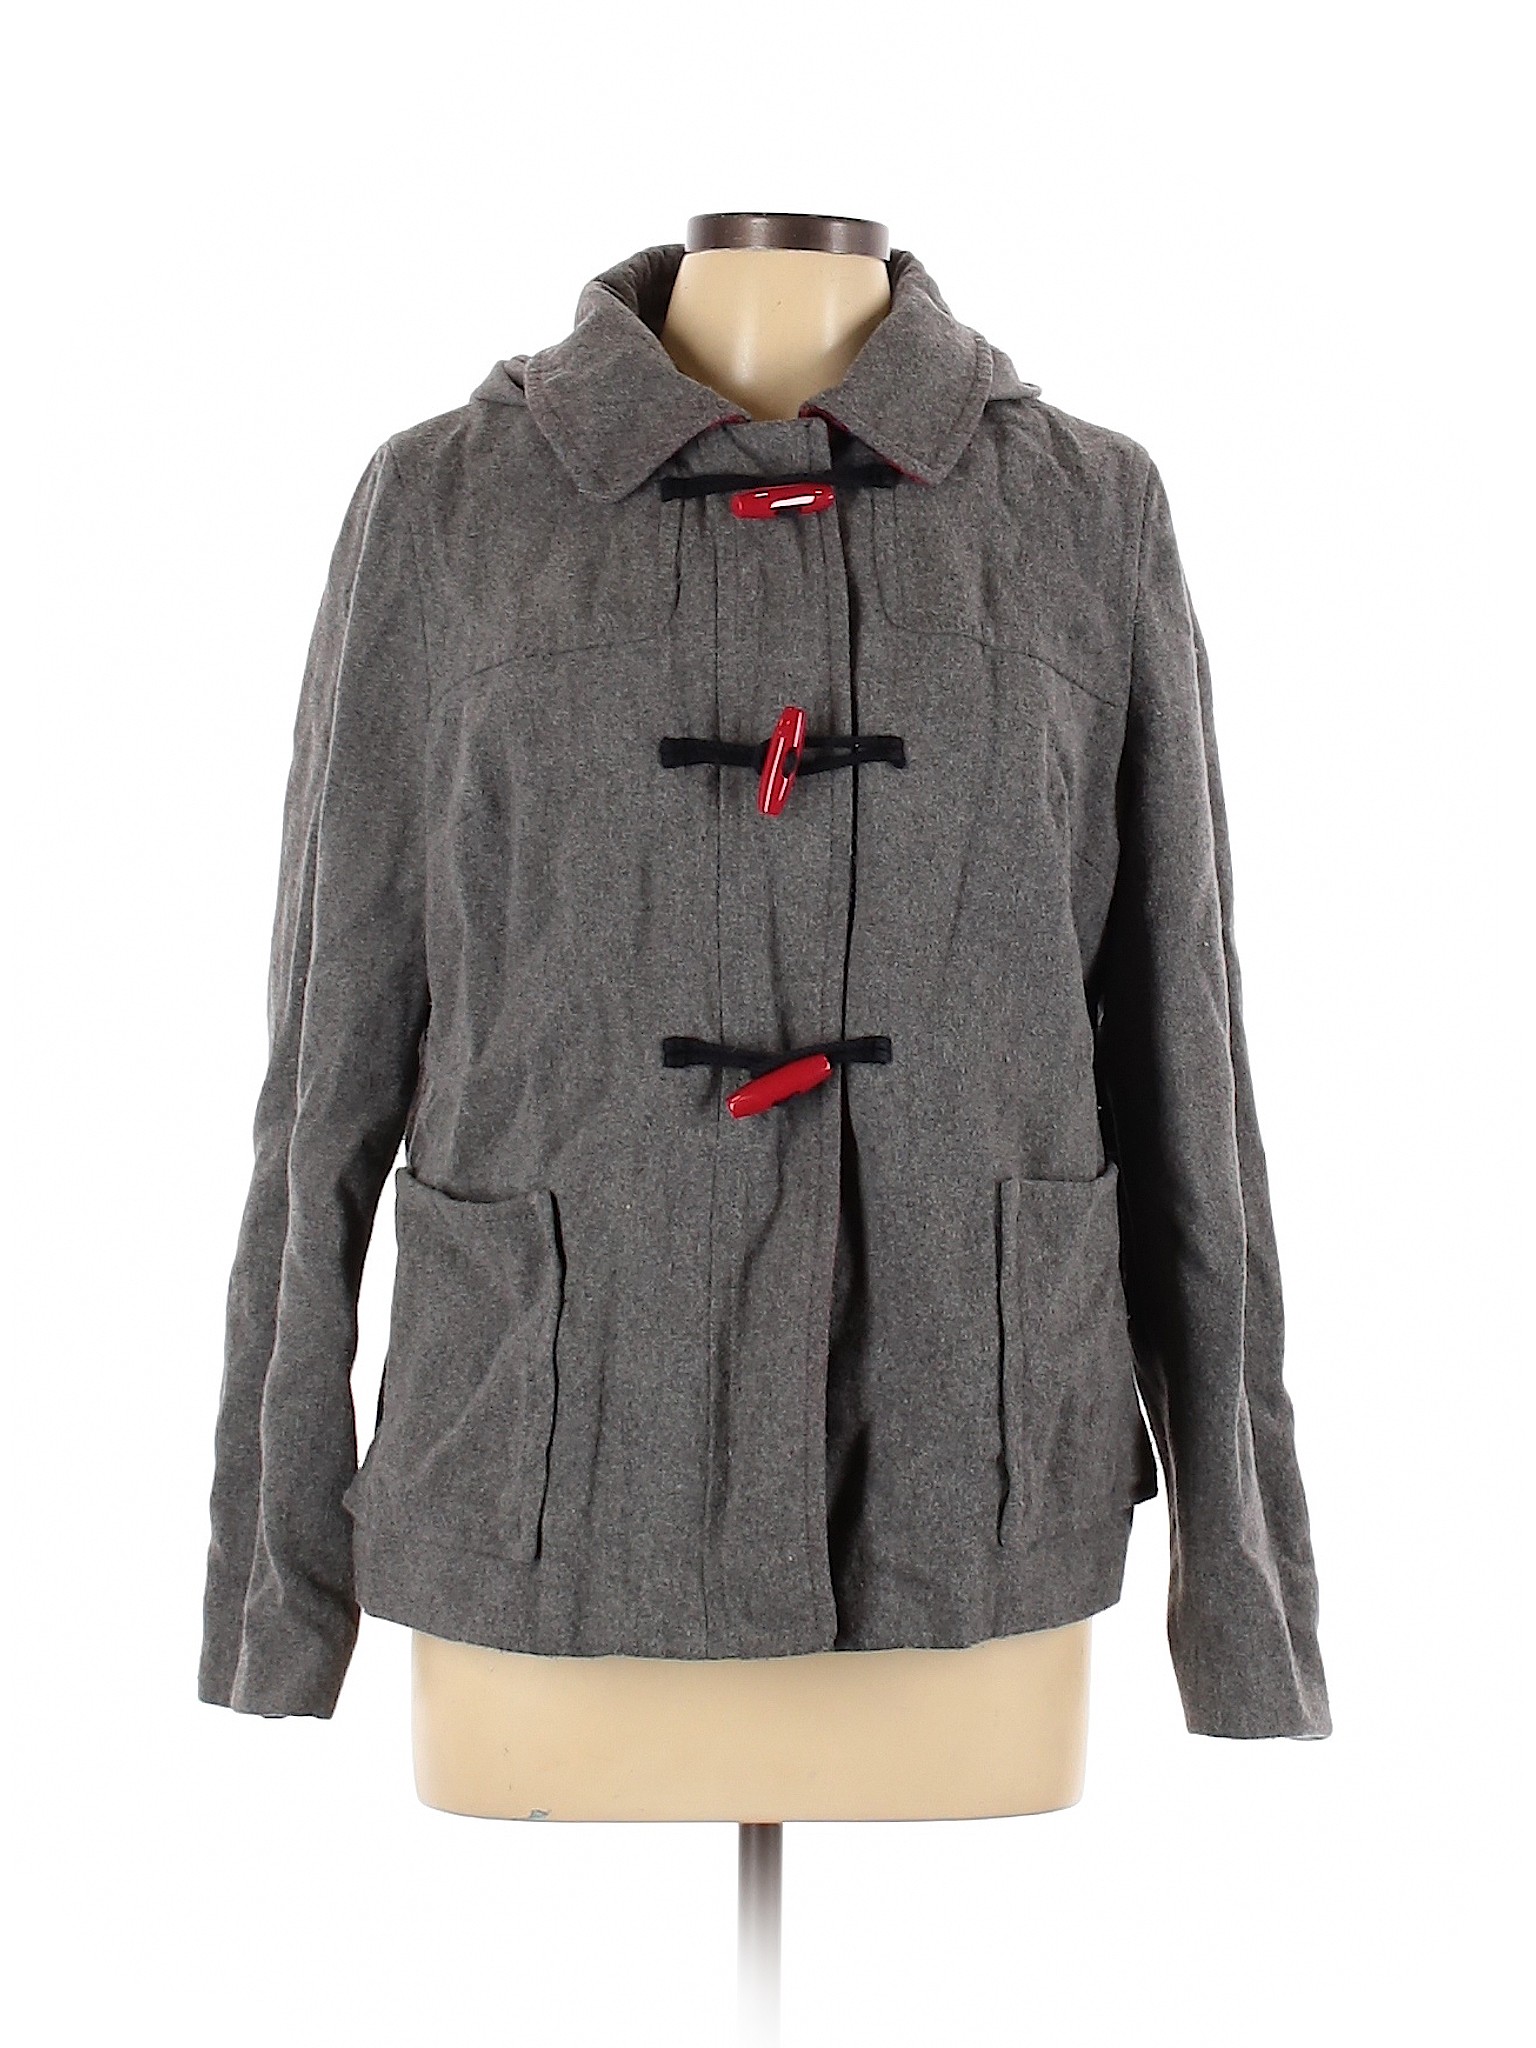 Old Navy Women Gray Jacket L | eBay